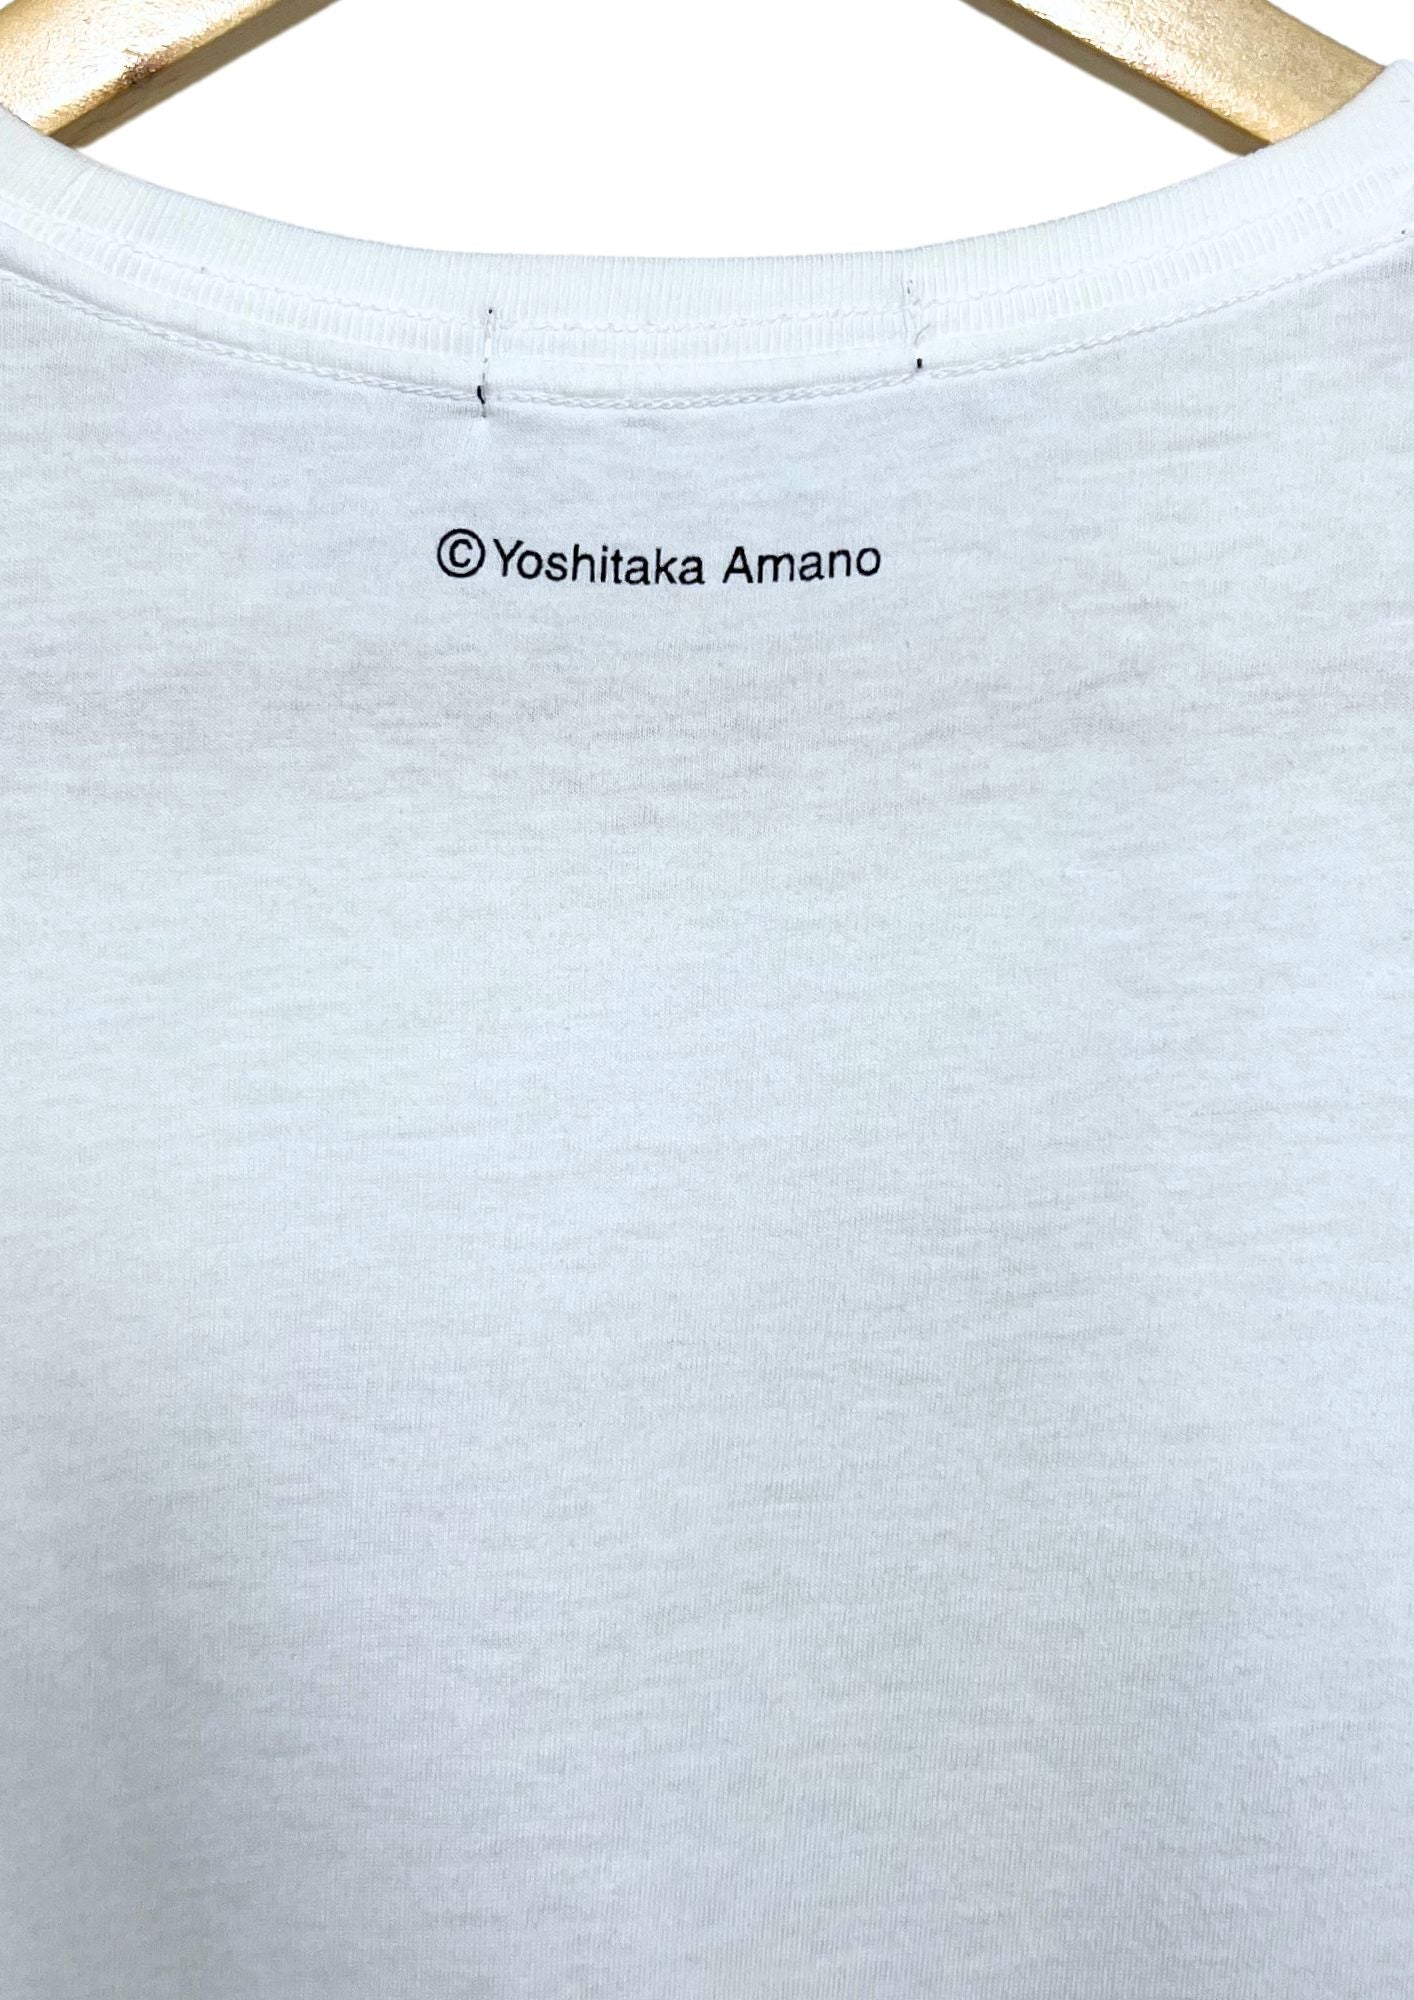 2007 Yoshitaka Amano x UNIQLO Creative Award T-shirt